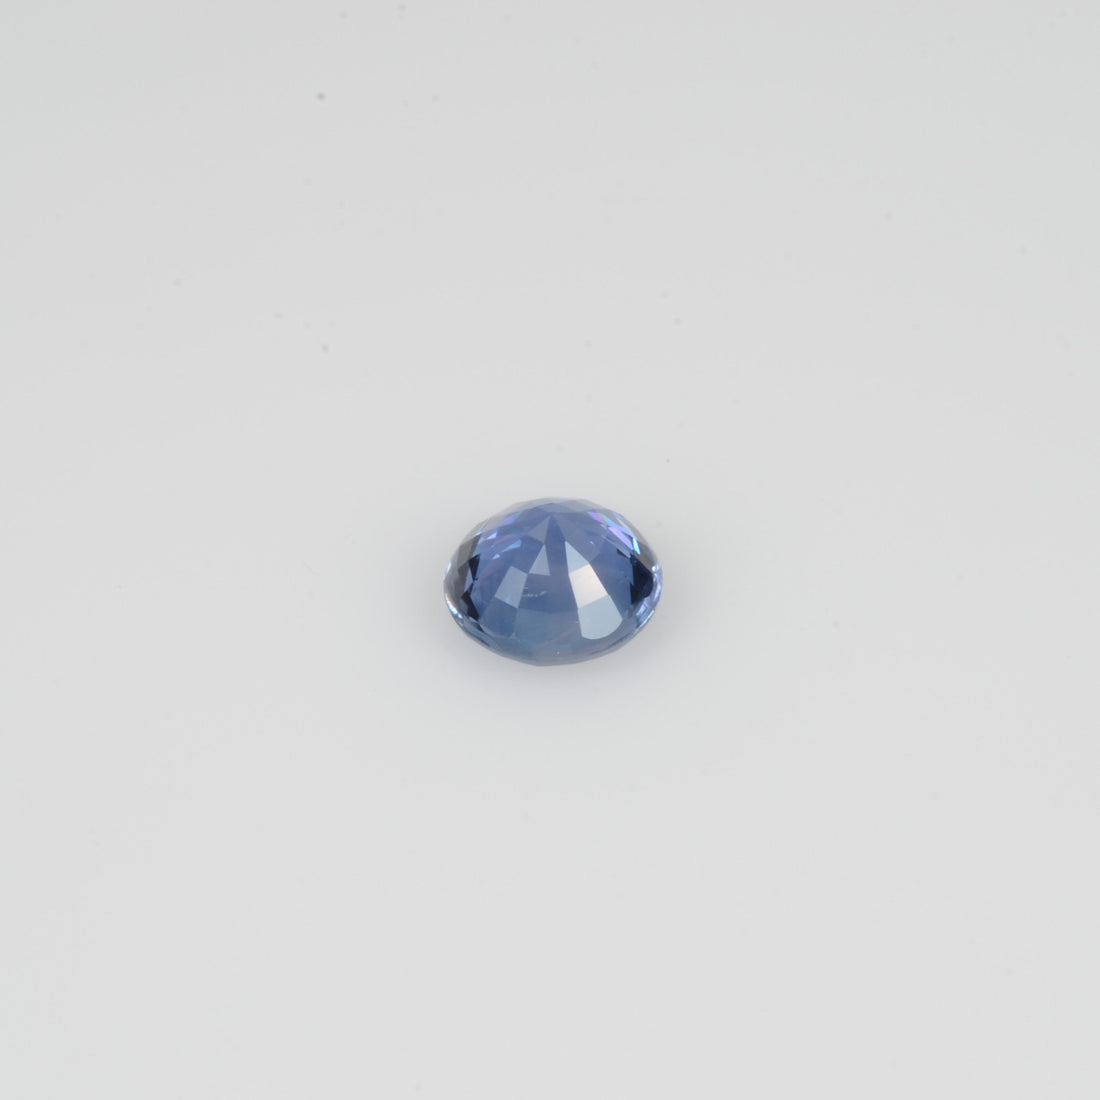 5.5 mm Natural Blue Sapphire Loose Gemstone Round Cut - Thai Gems Export Ltd.